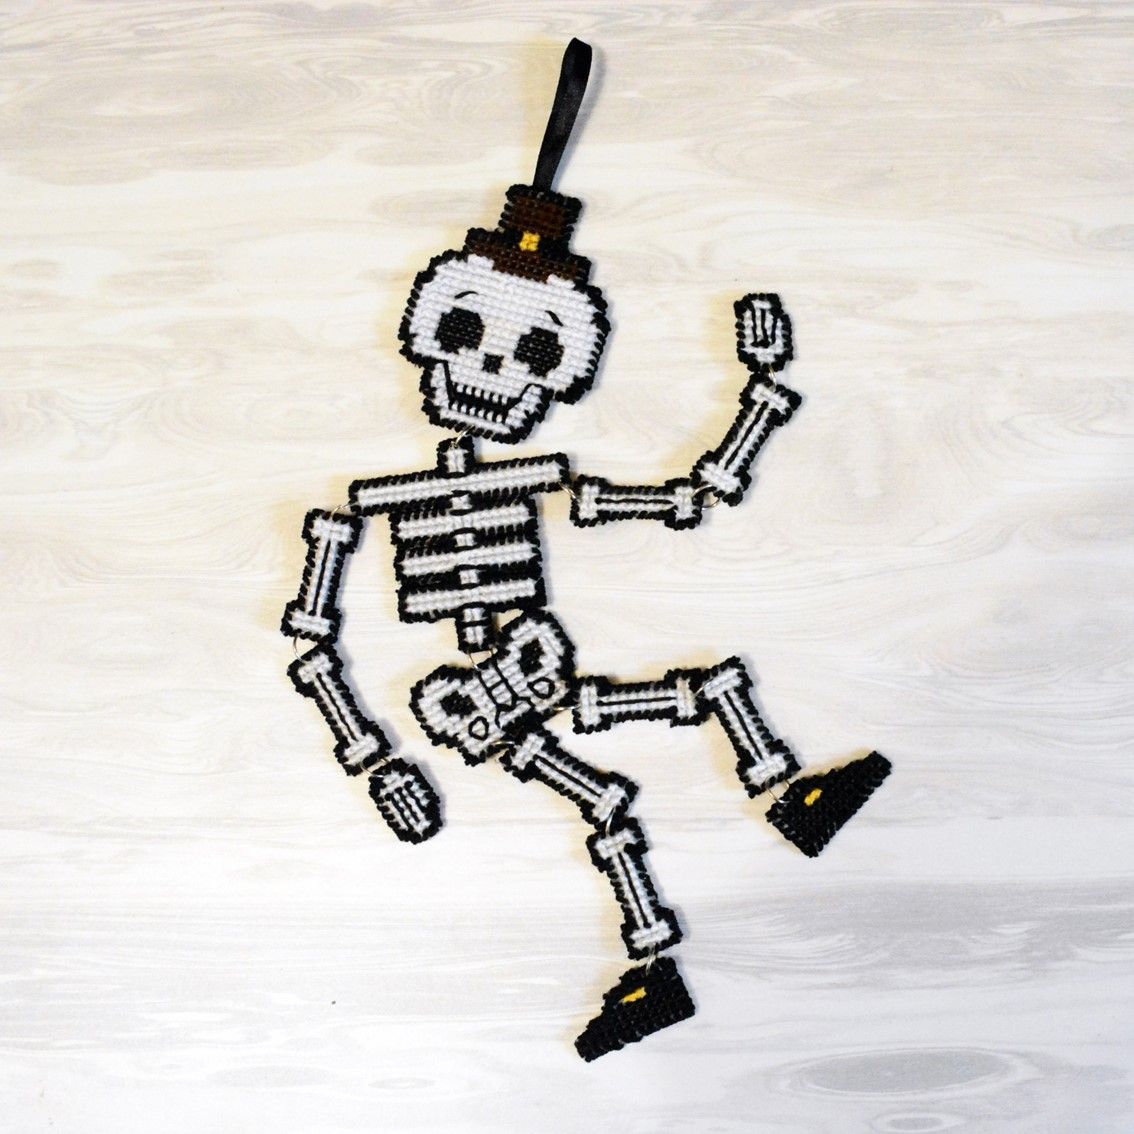 Skeleton cross stitch pattern for plastic canvas by Smasterilli